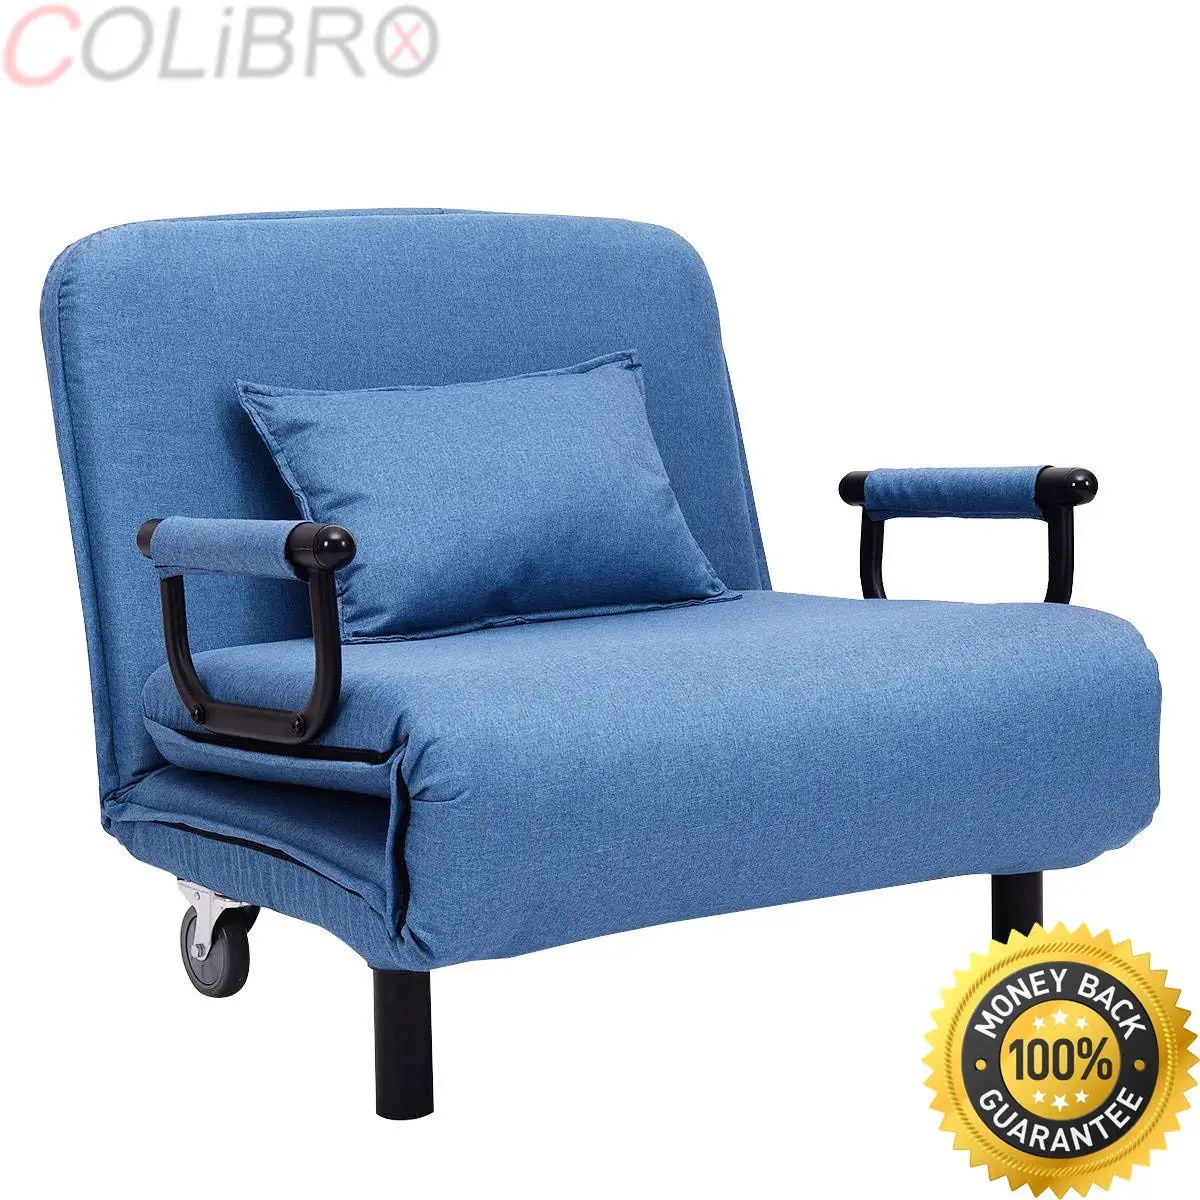 cheap convertible sofa chair bed find convertible sofa